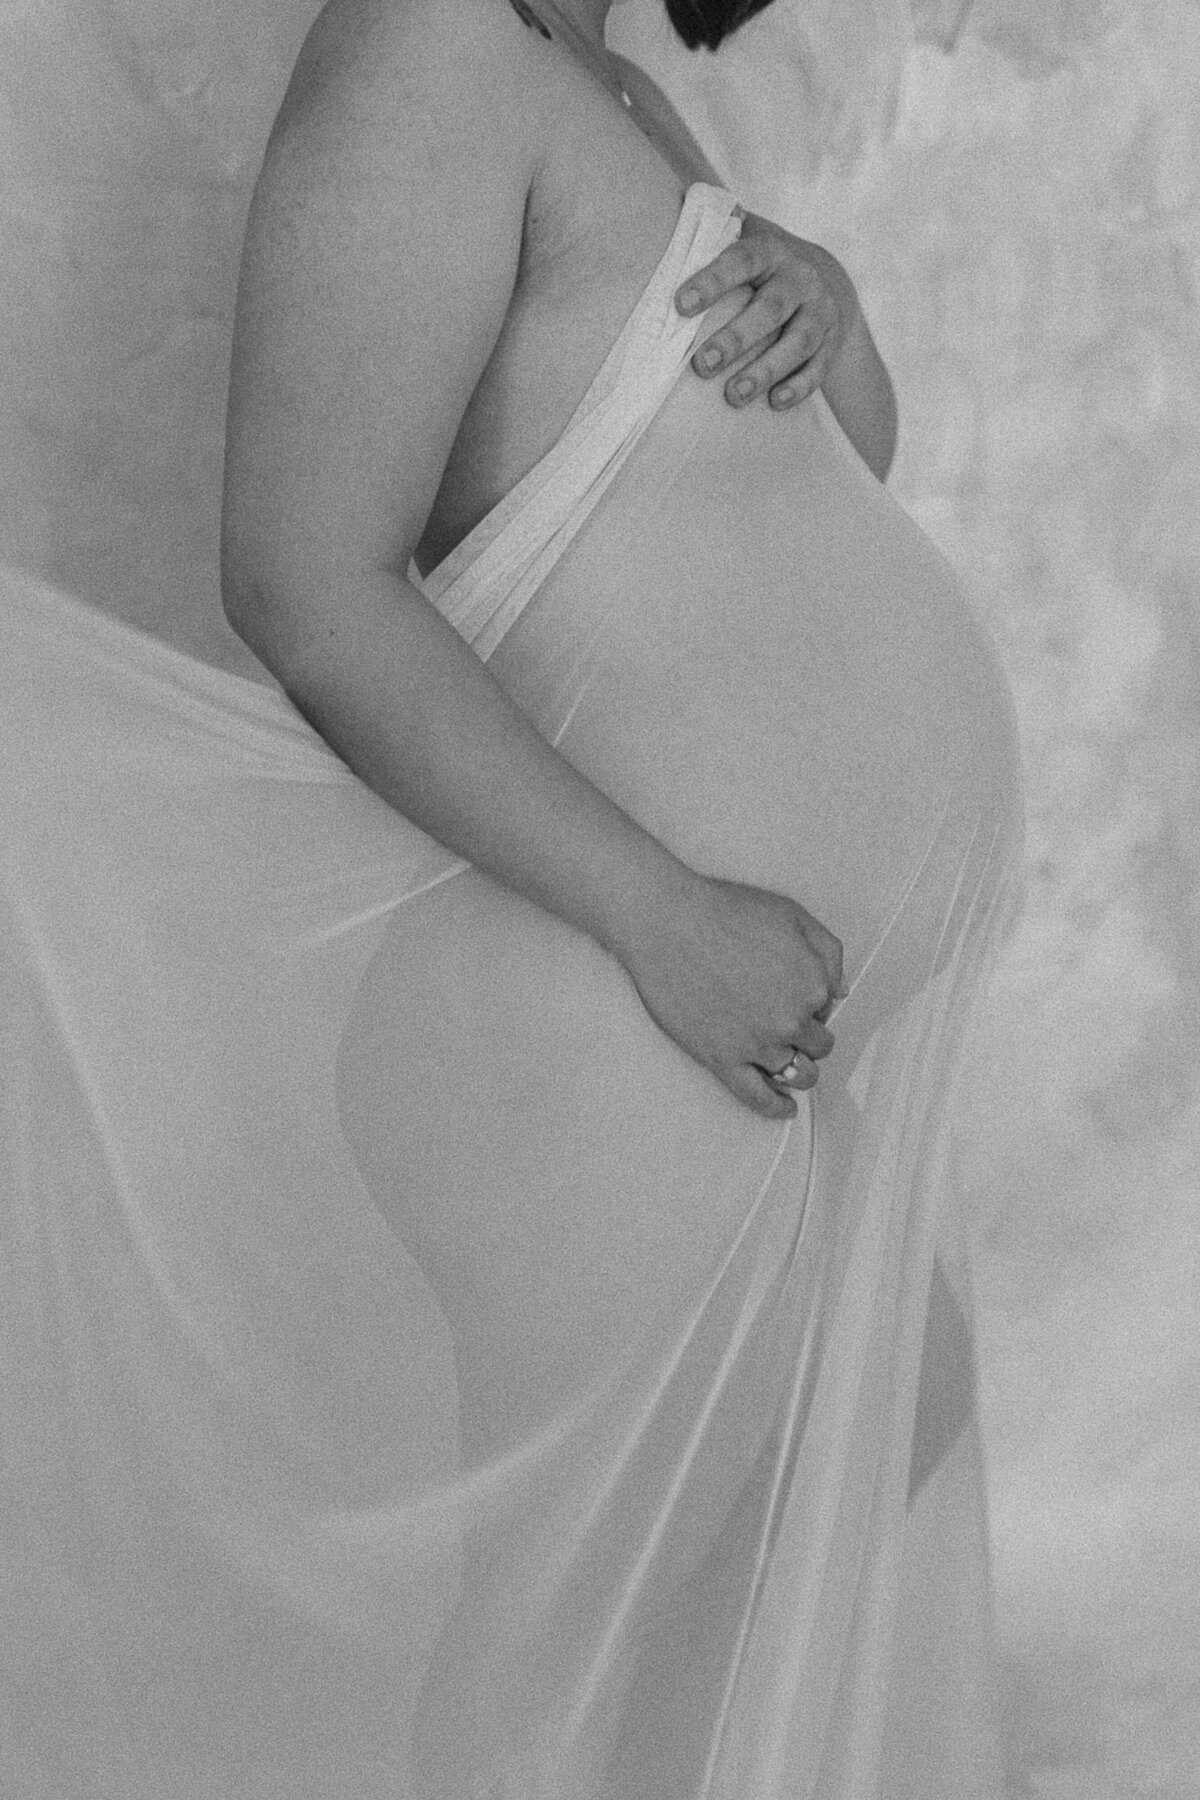 audra-jones-photography-fine-art-boudoir-maternity-eva-133